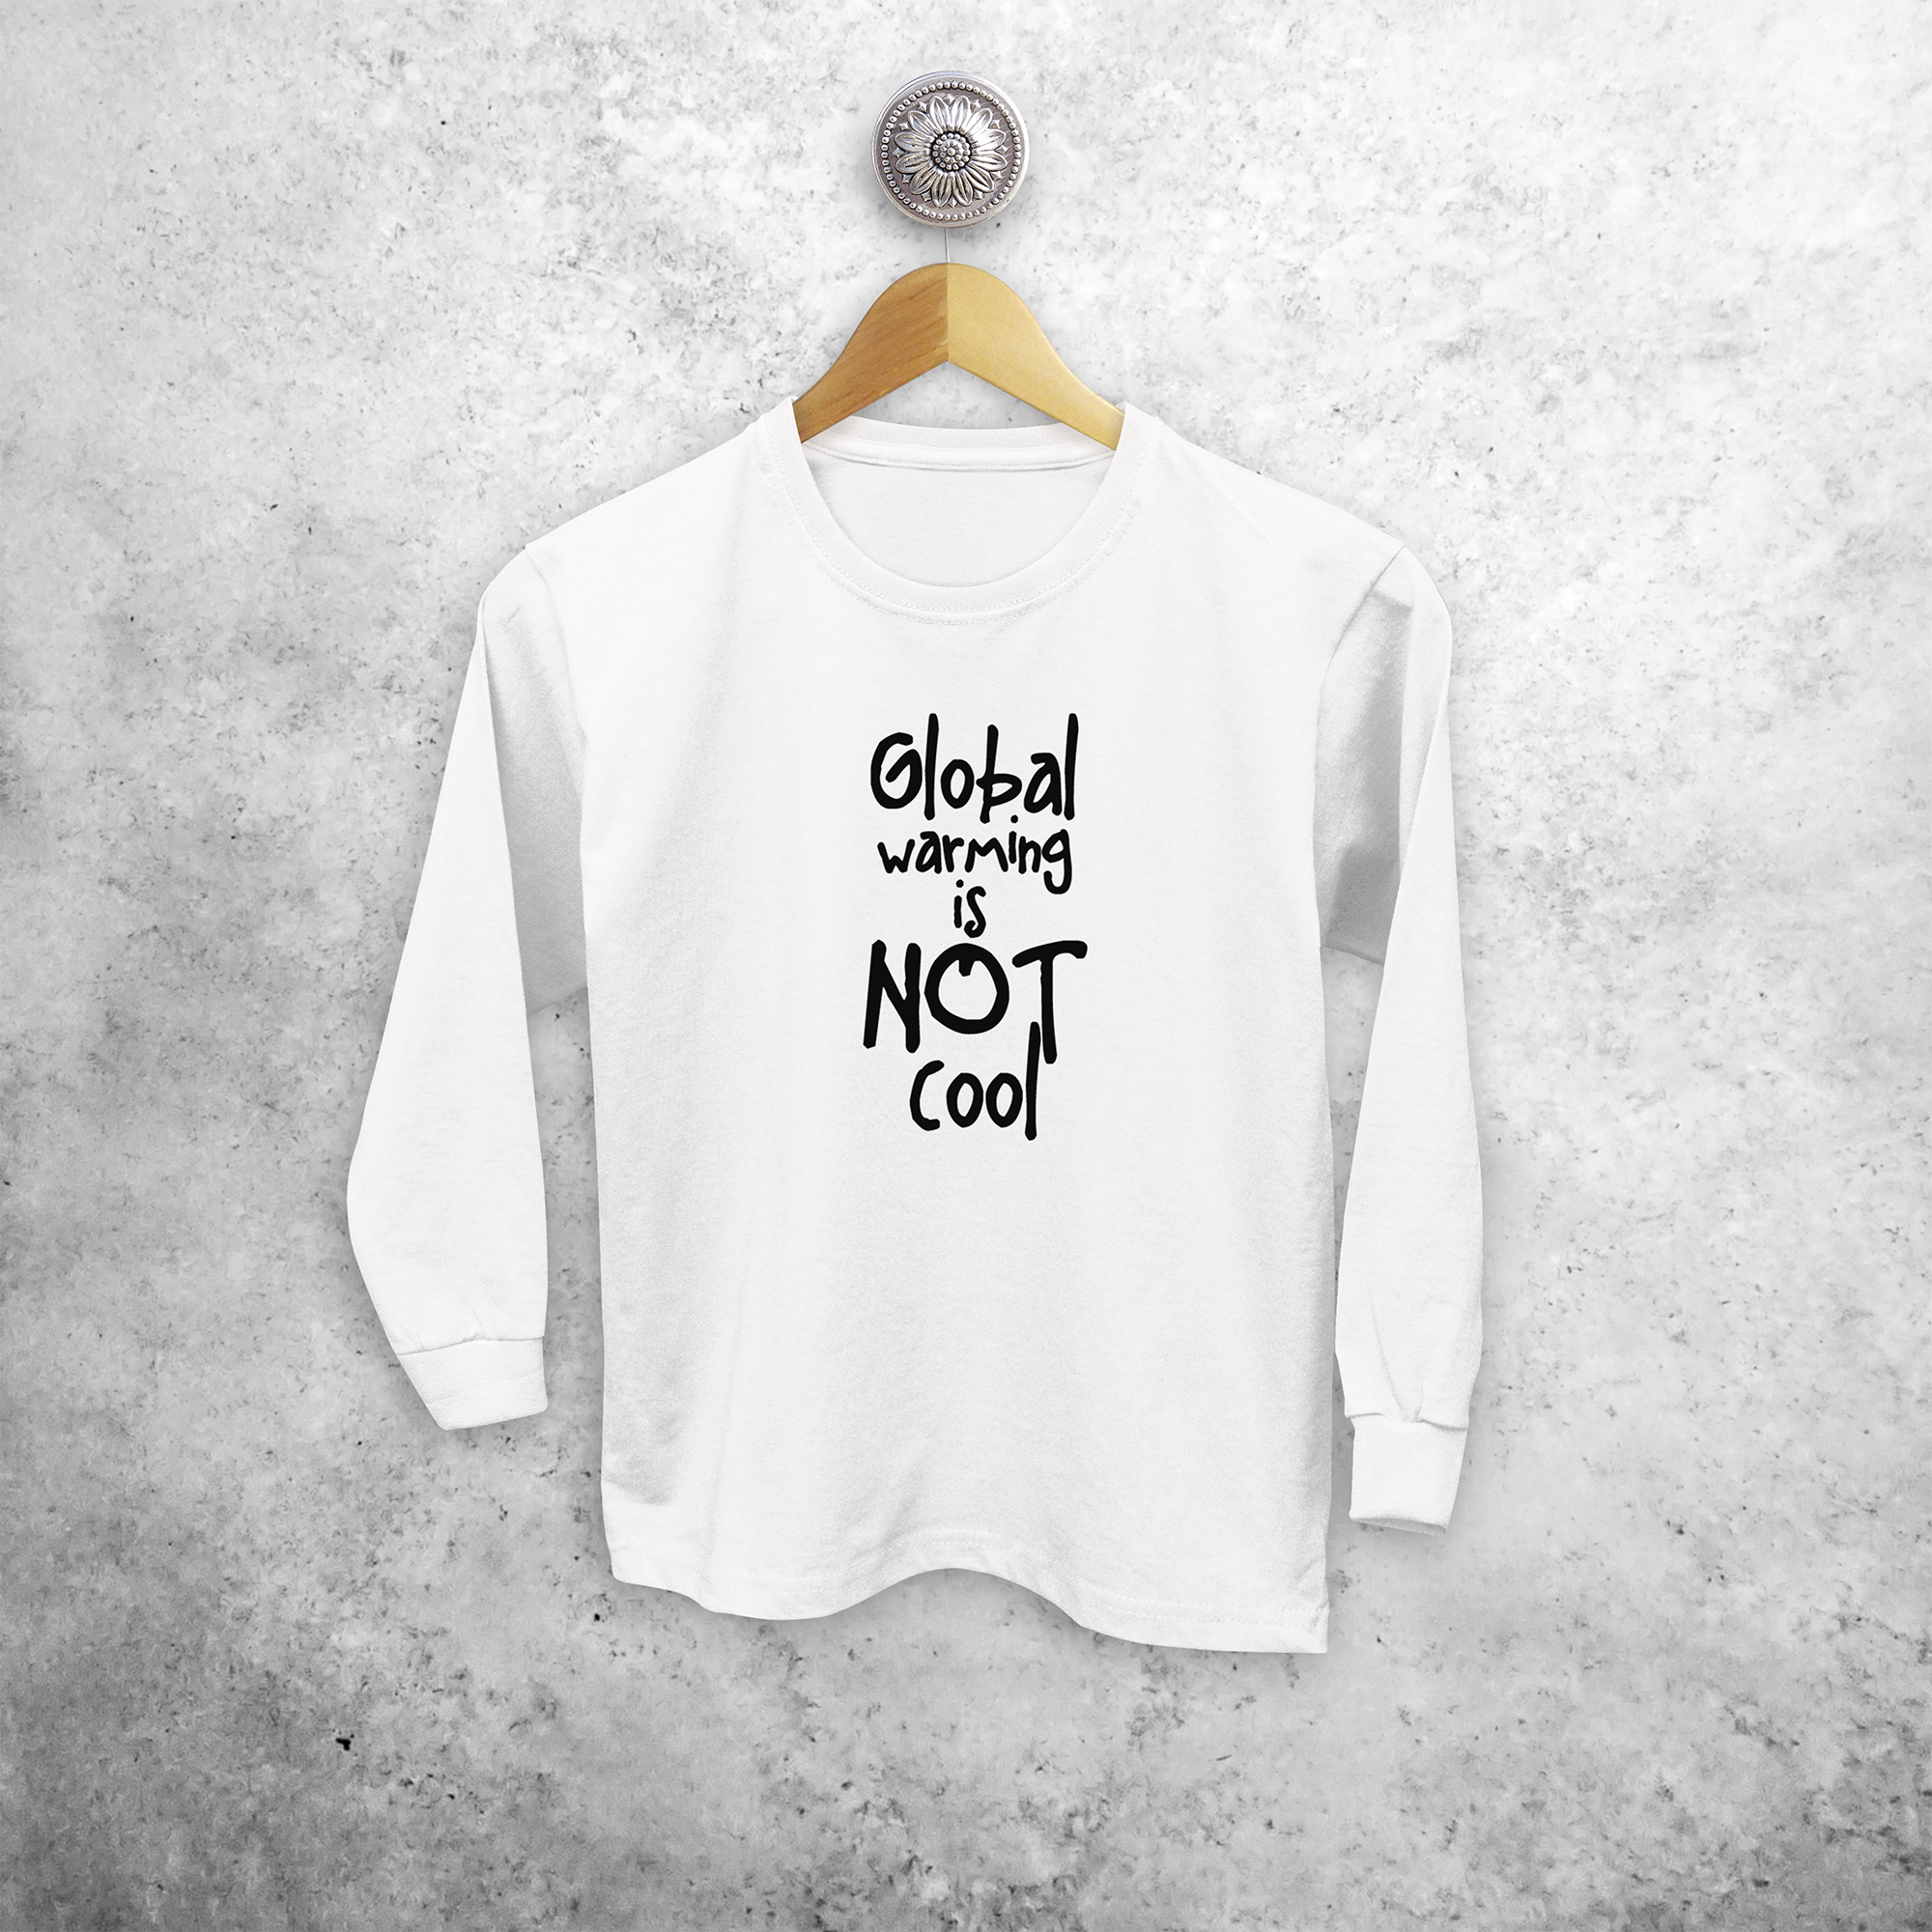 'Global warming is not cool' kids longsleeve shirt